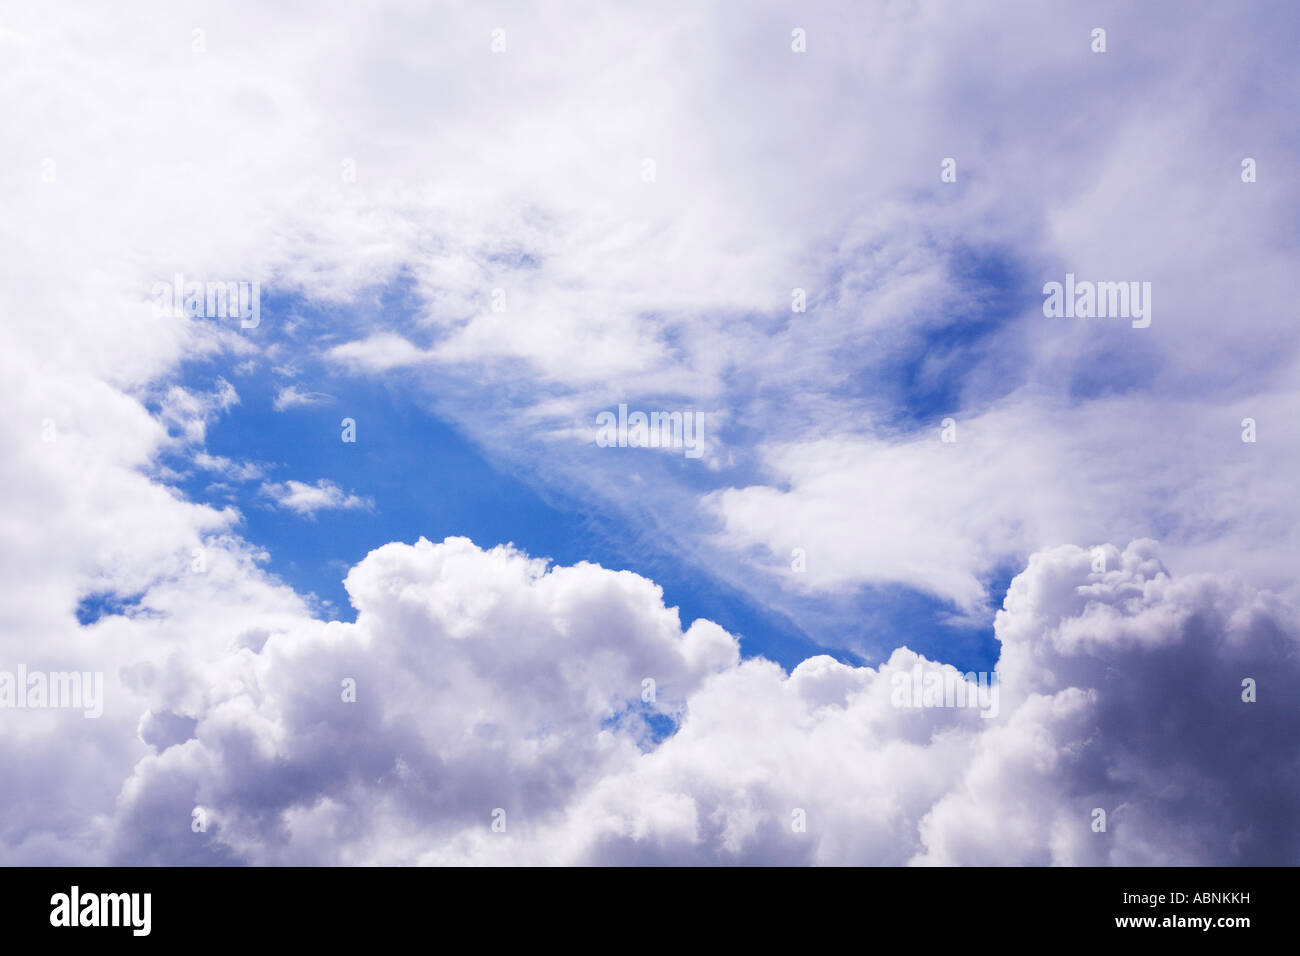 Blue sky white clouds atmosphere heavens white altitude altocumulus altostratus cirrocumulus cirrostratus cirrus weather summer Stock Photo